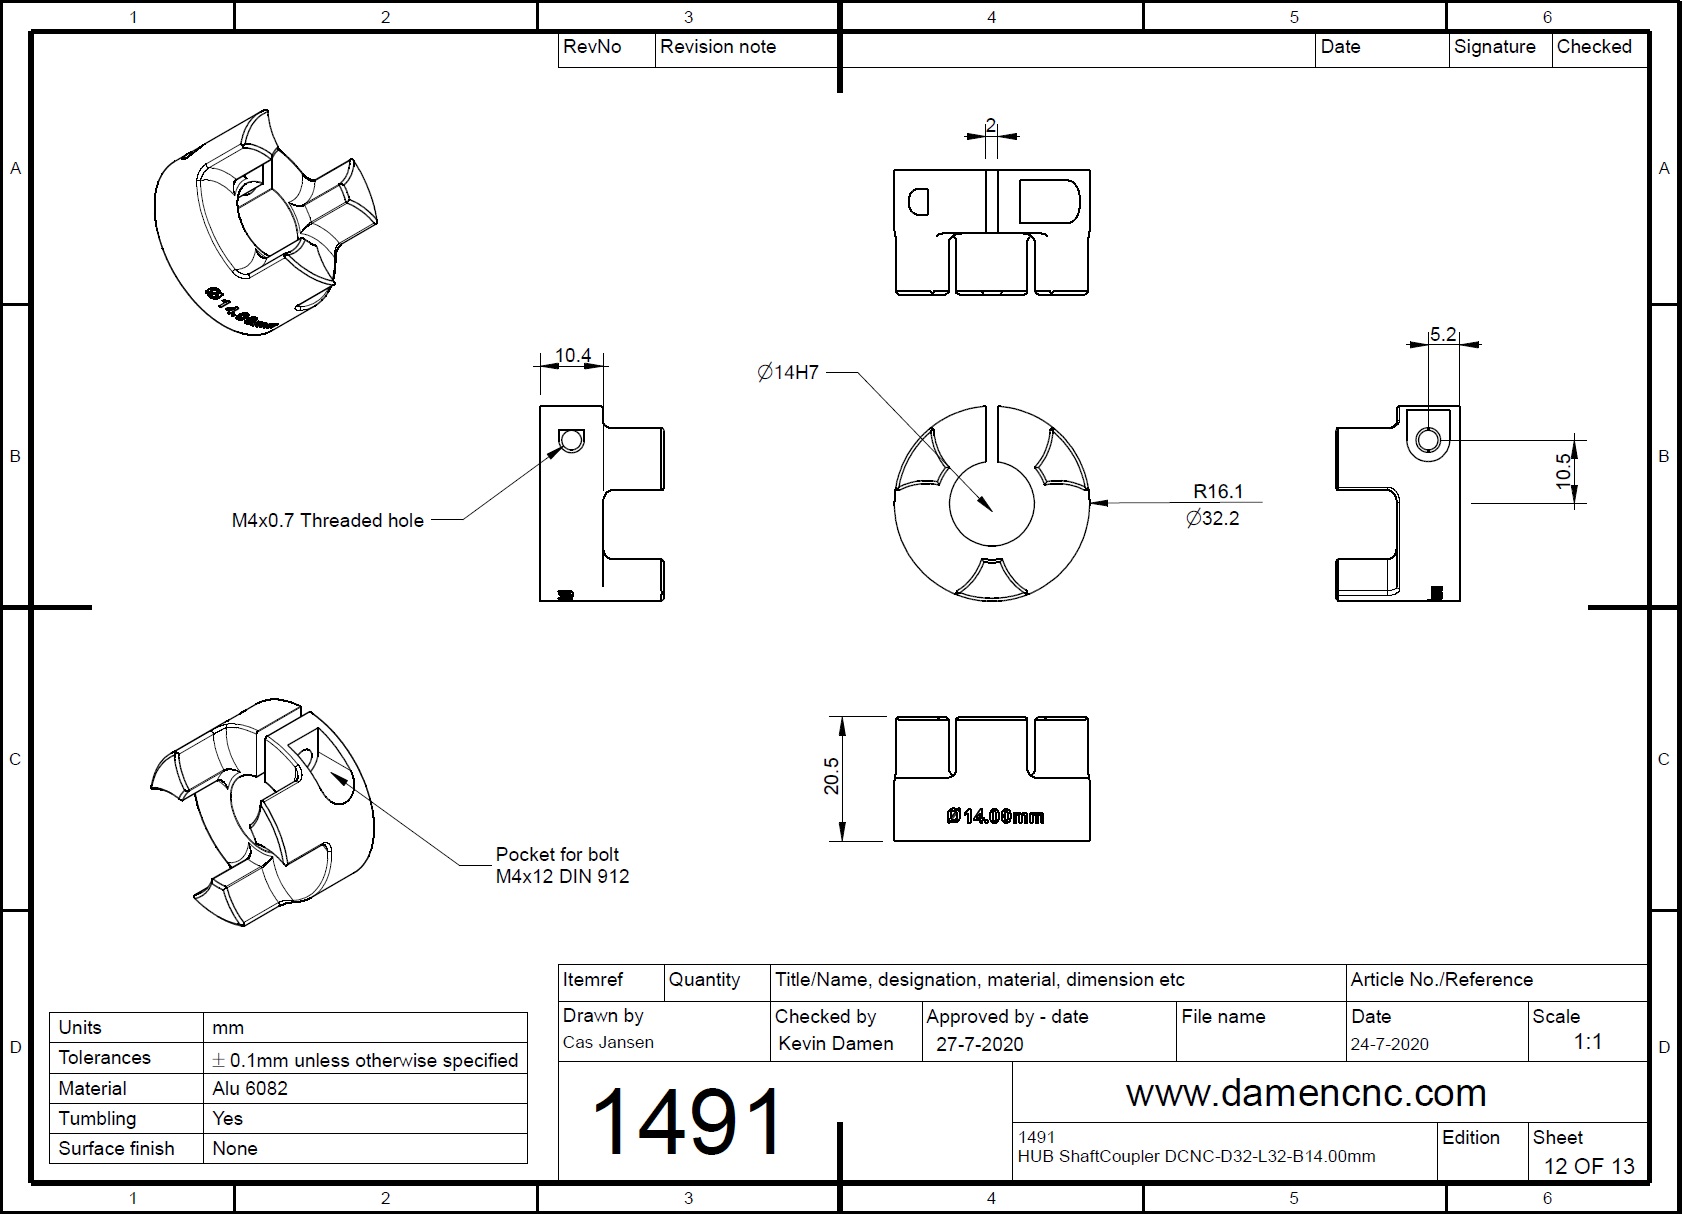 14914 hub shaftcoupler dcncd32l32b1400mm 2d dimensions